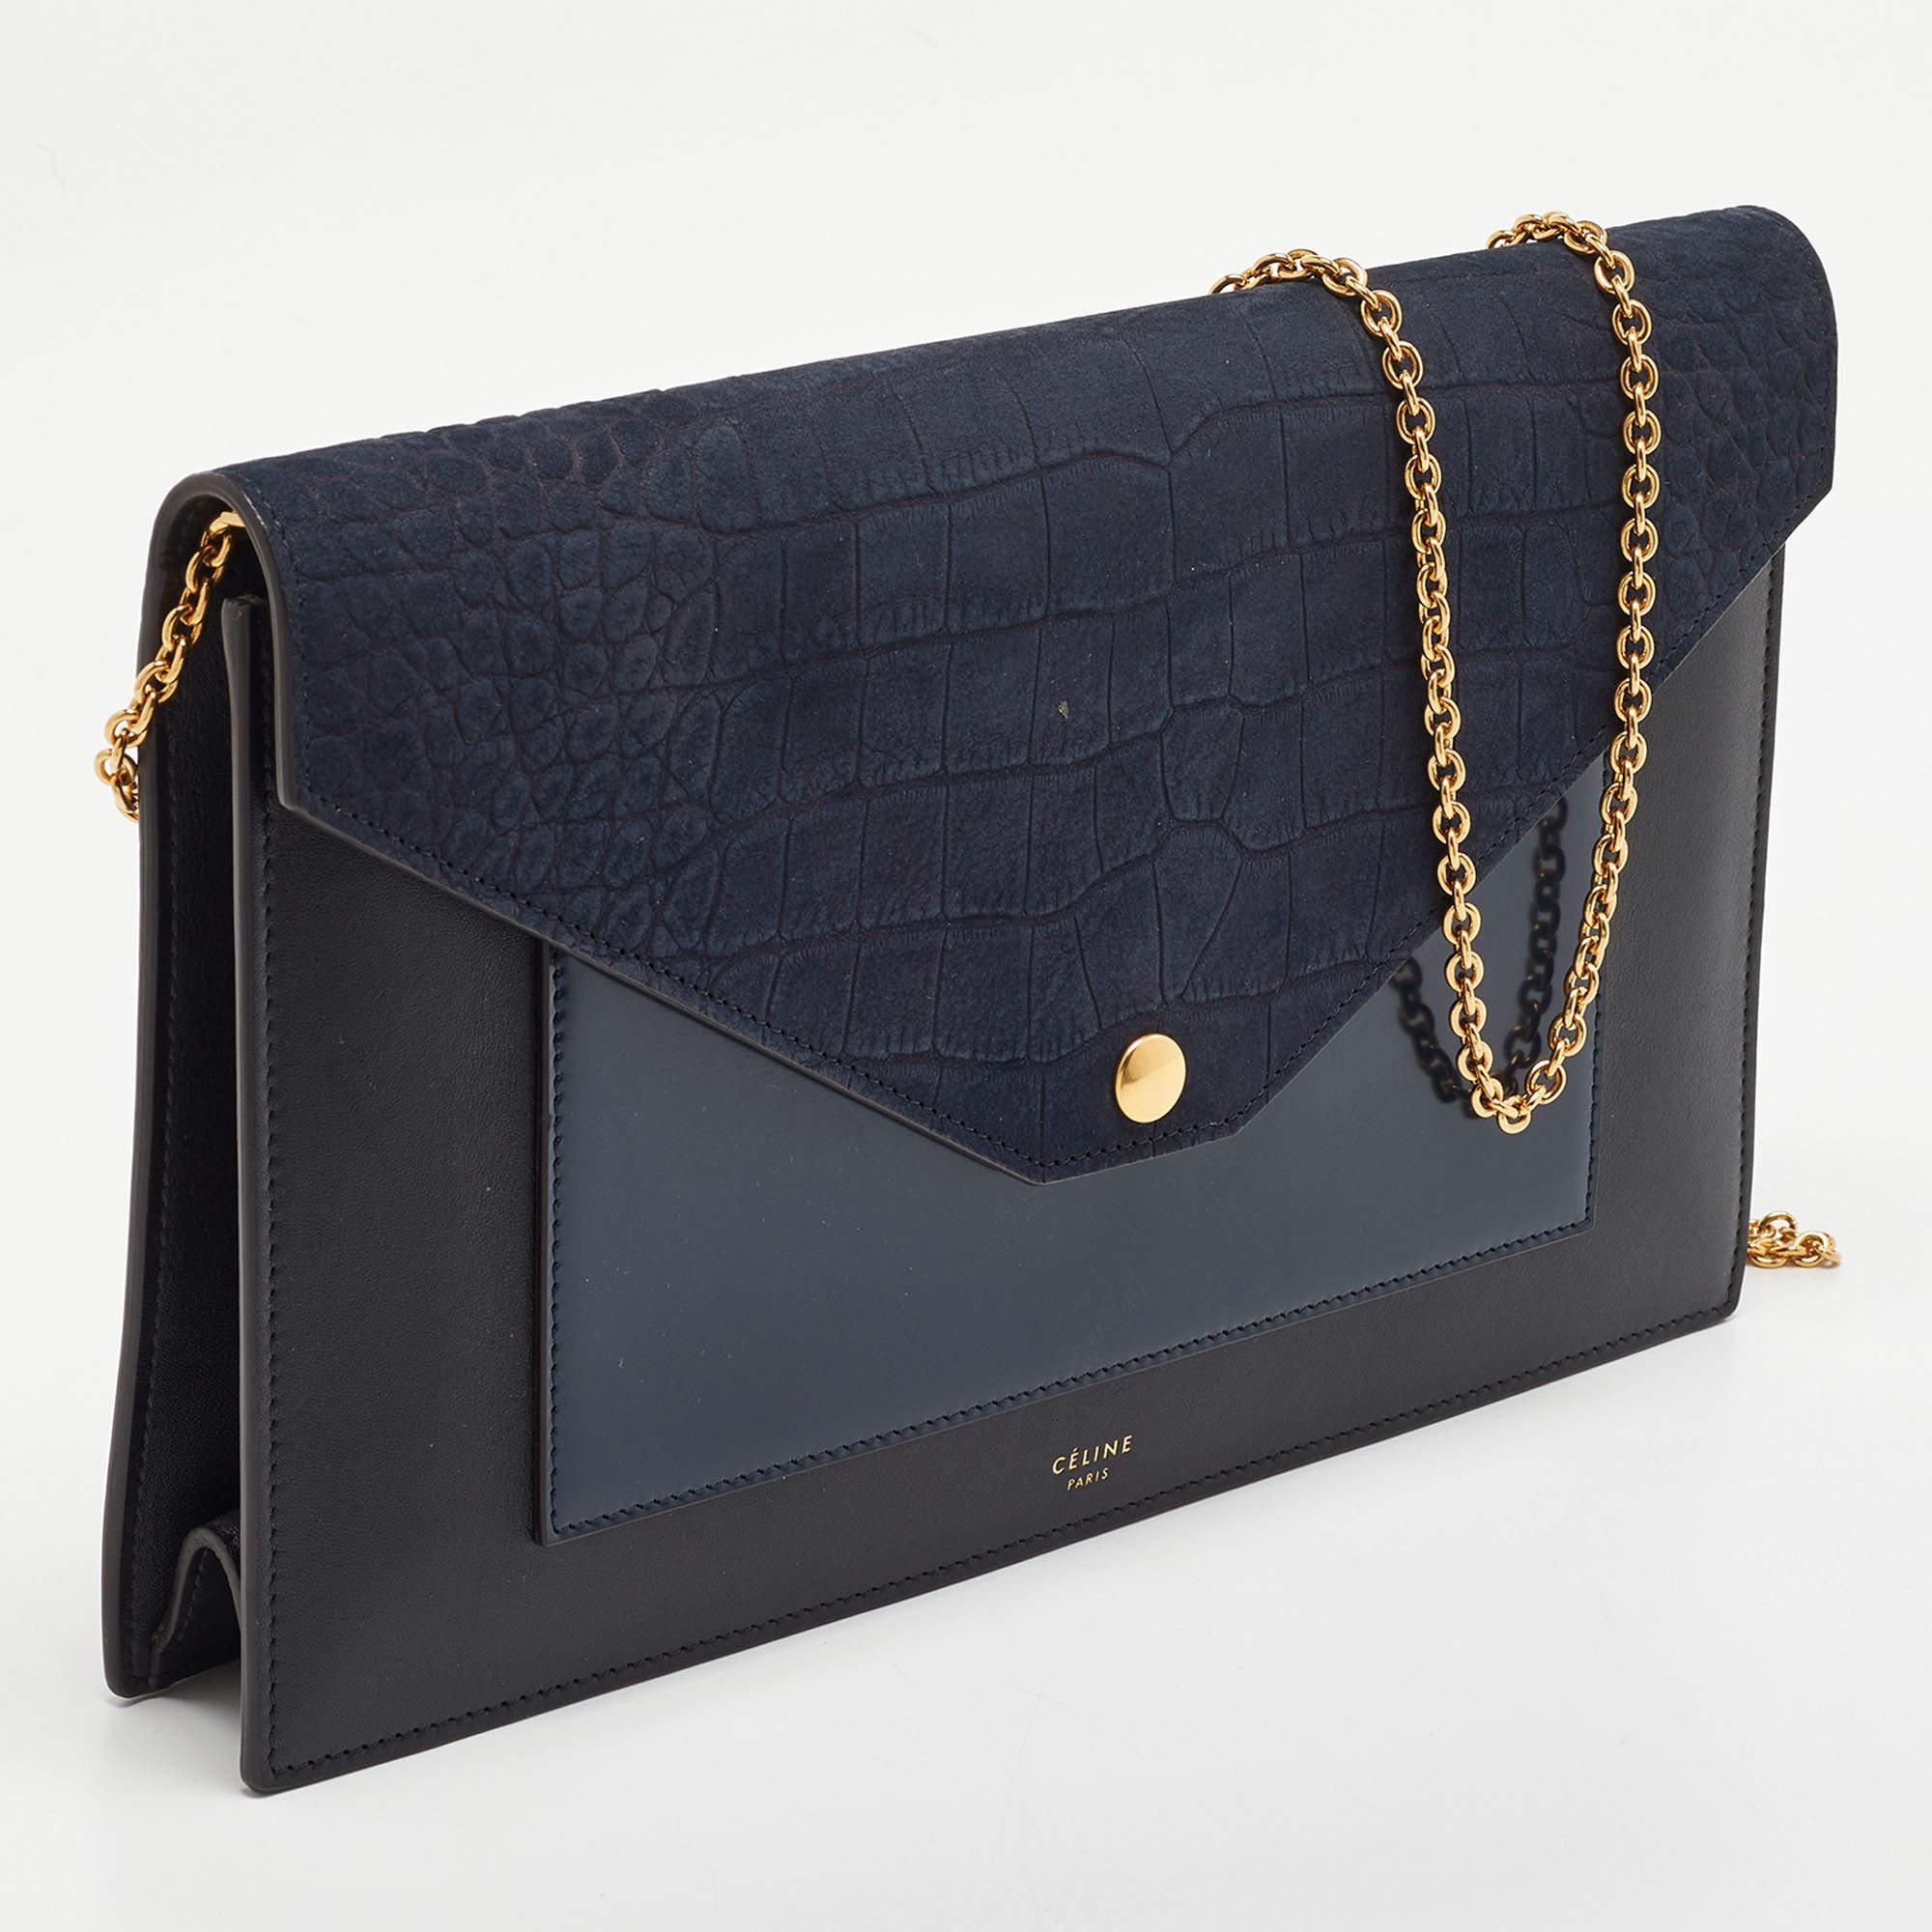 Women's Celine Navy Blue/Black Croc Embossed and Leather Pocket Envelope Chain Clutch